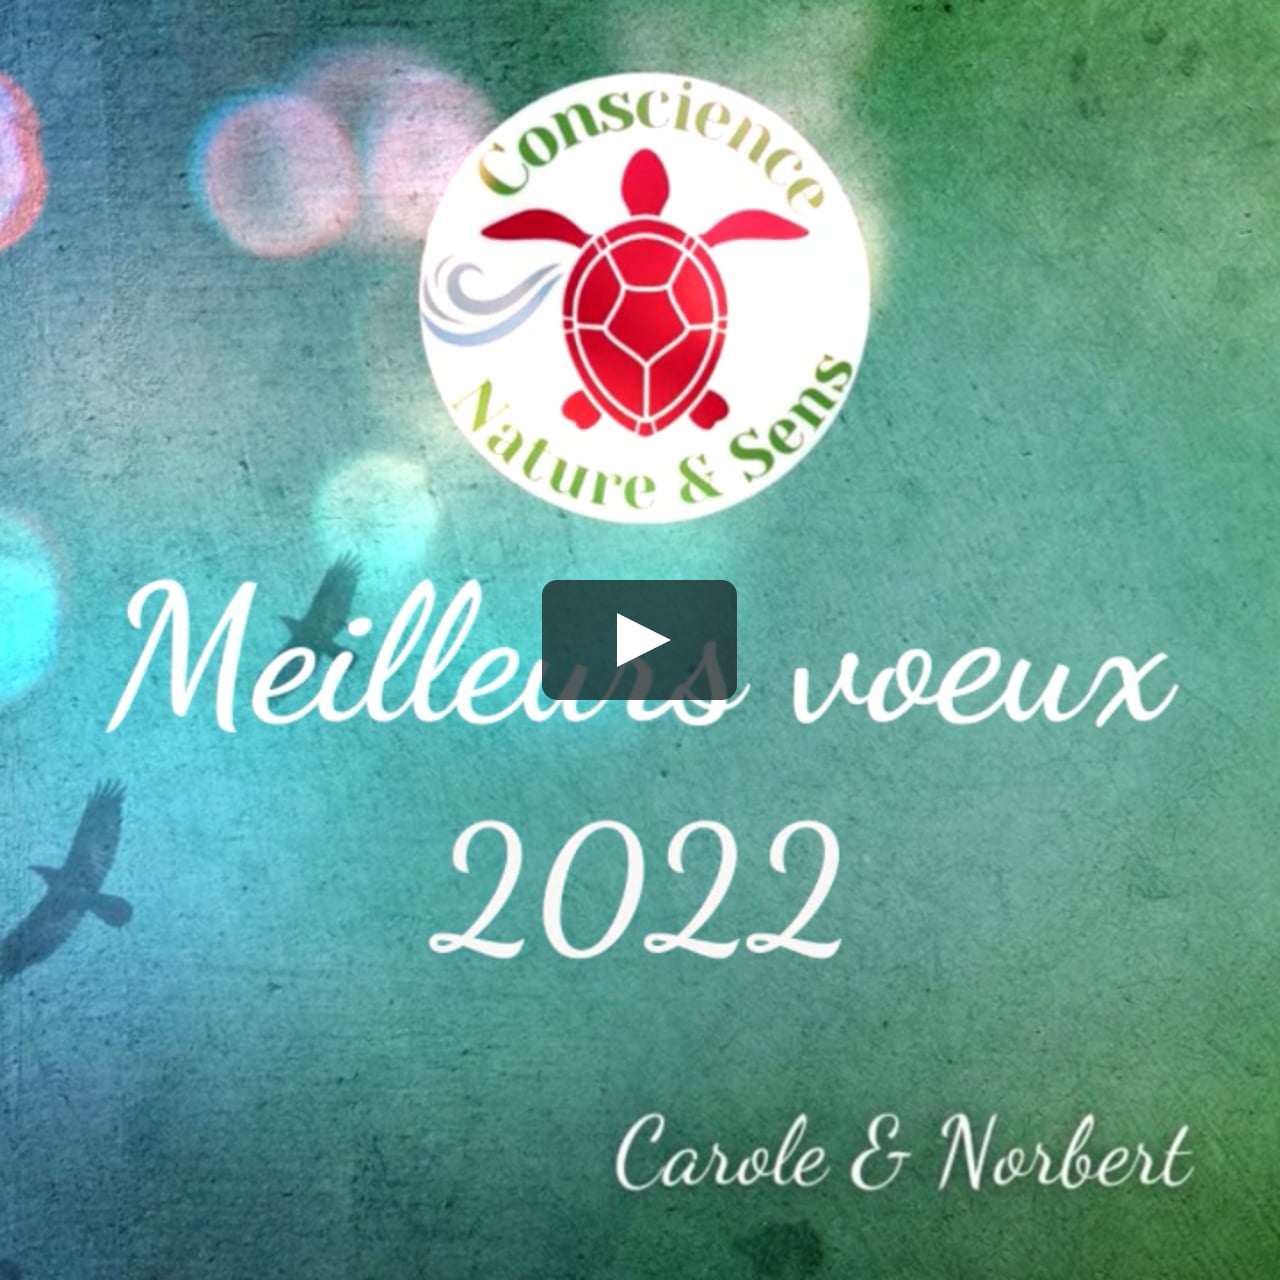 MEILLEURS VOEUX 2022 on Vimeo